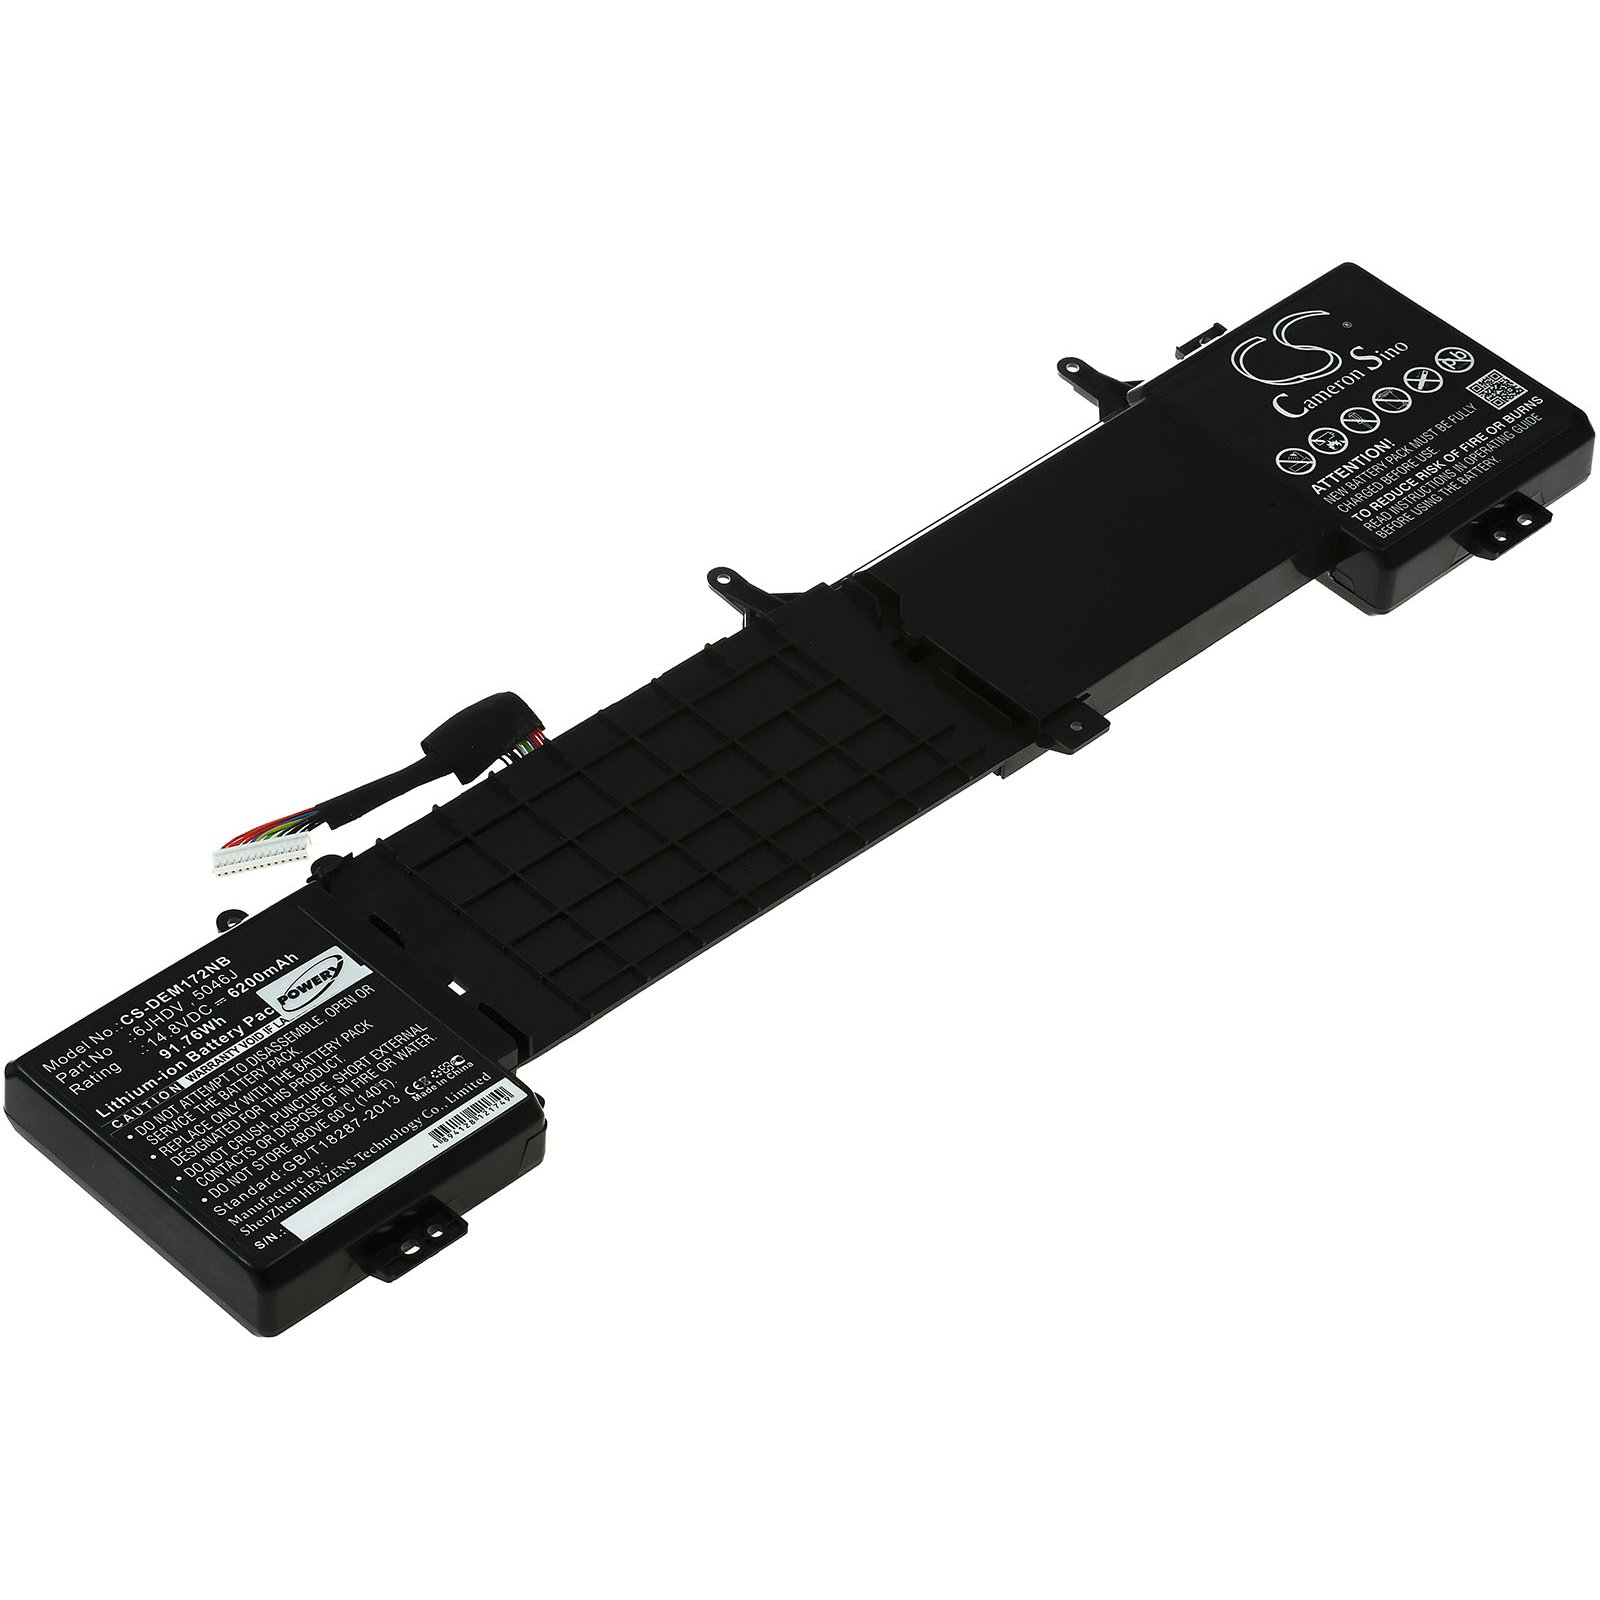 POWERY Akku für Dell Volt, 6200mAh Akku, Li-Ion ANW17-2136SLV 14.8